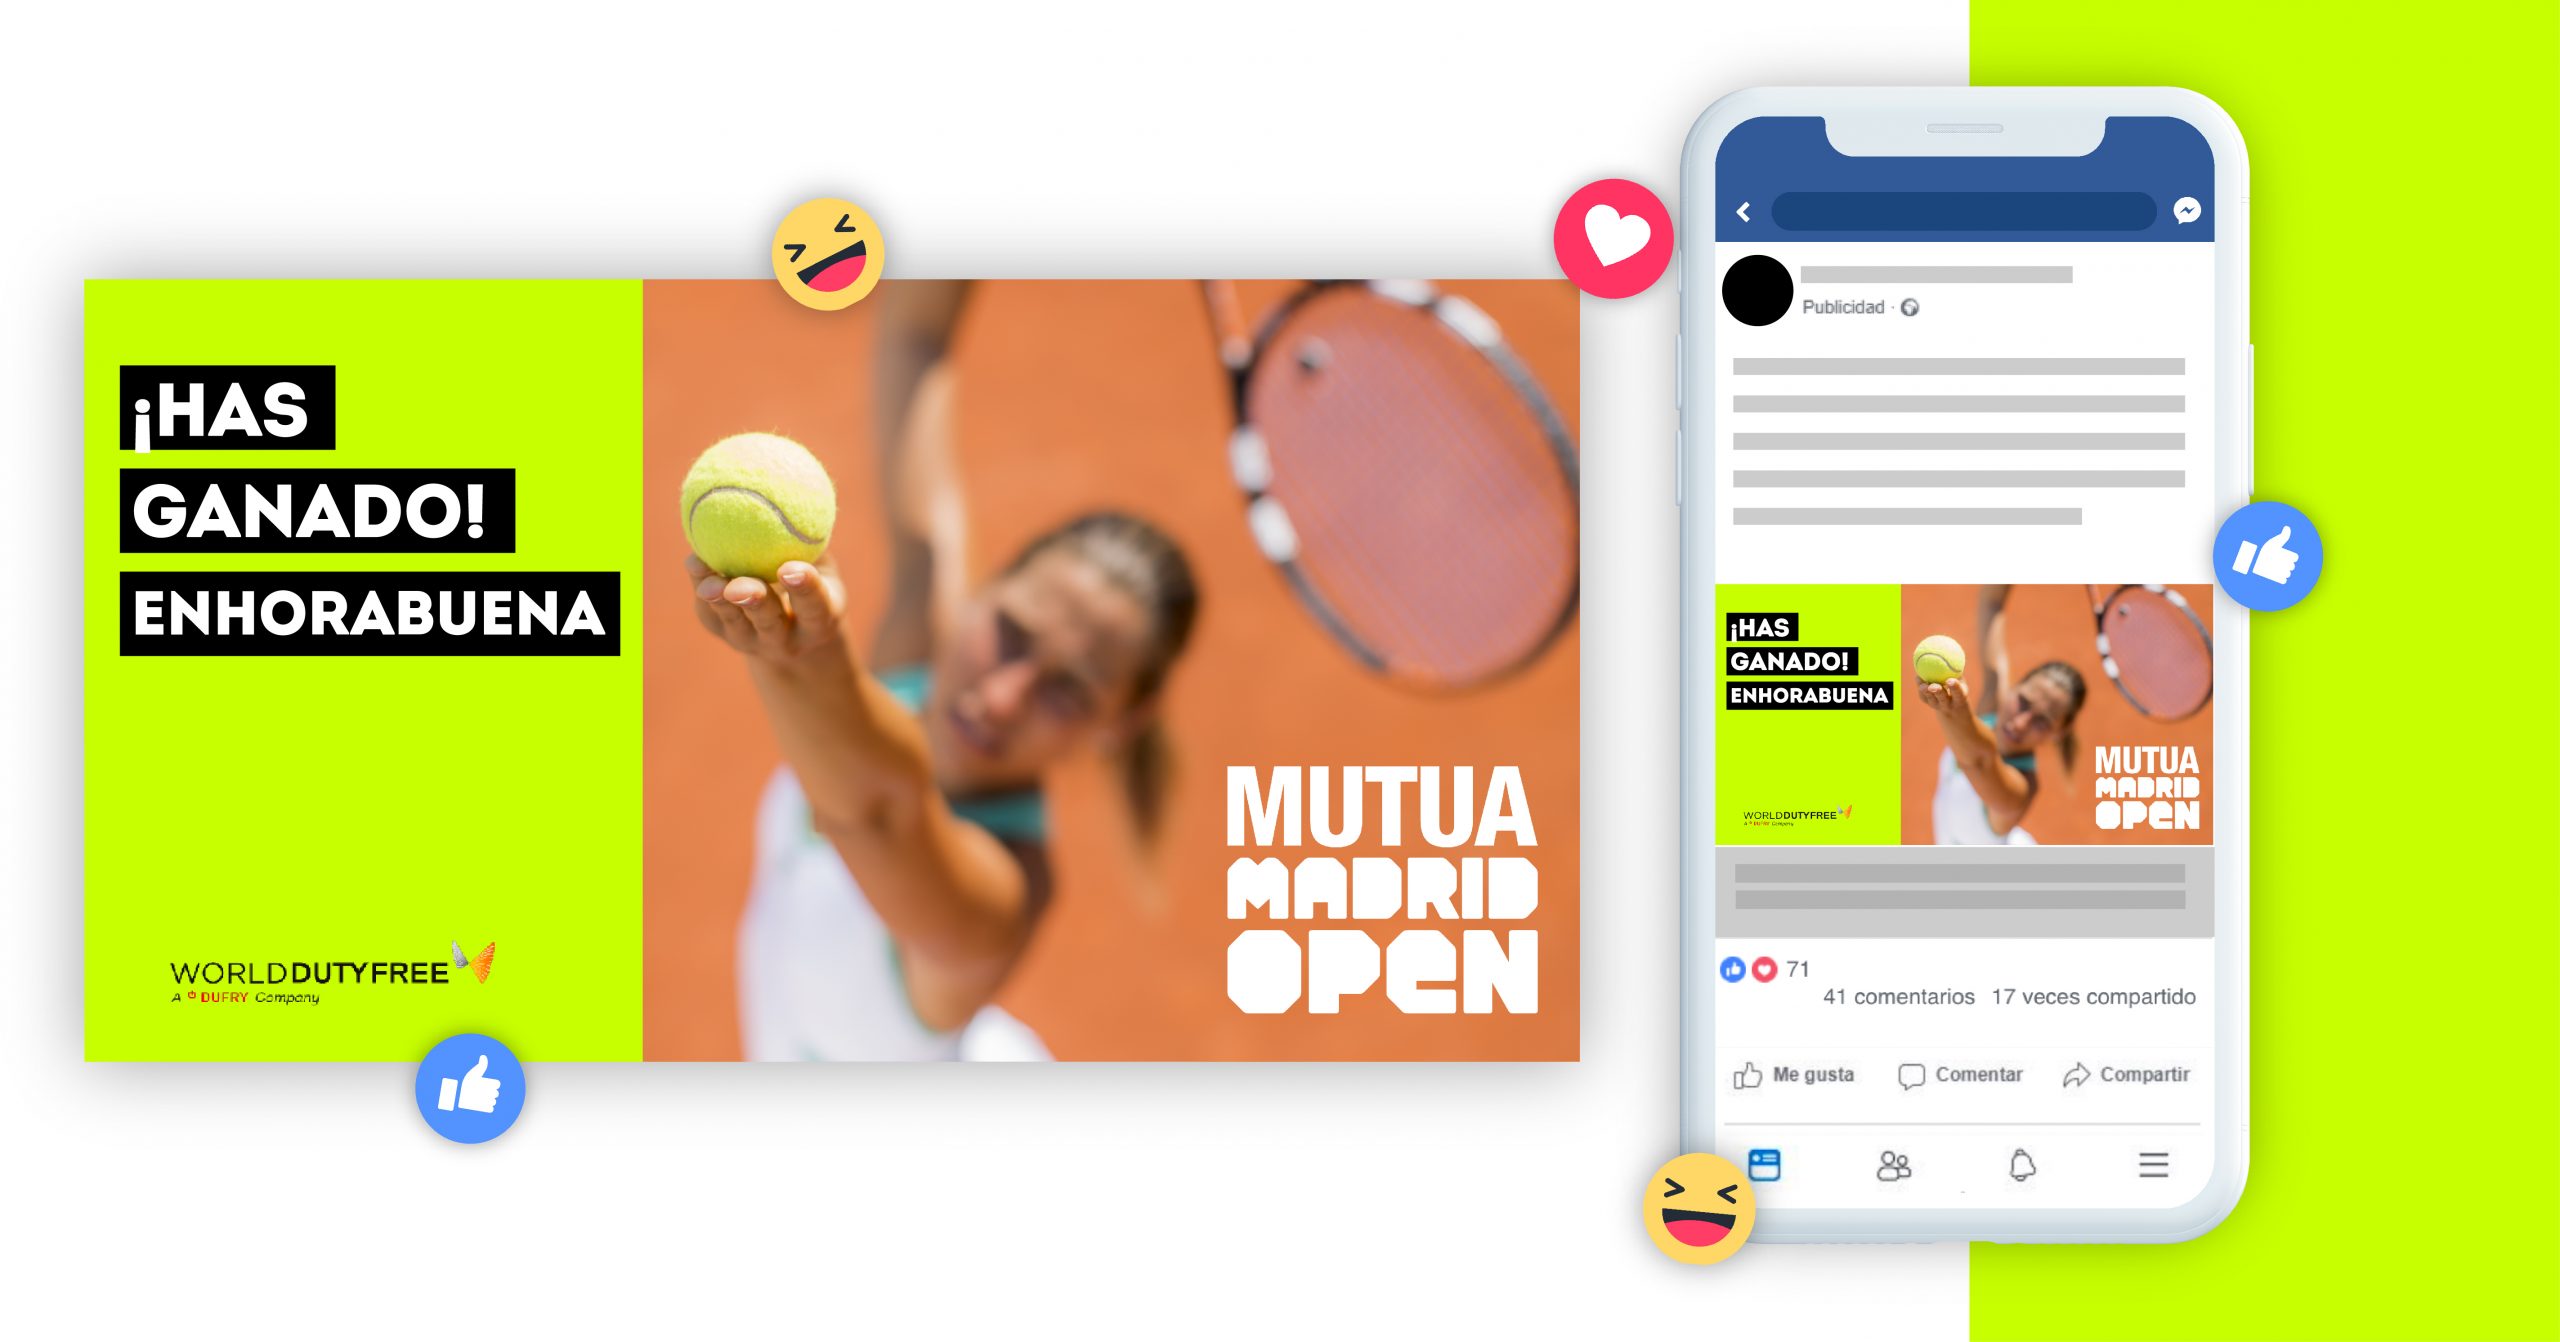 Mutua Madrid Open Facebook